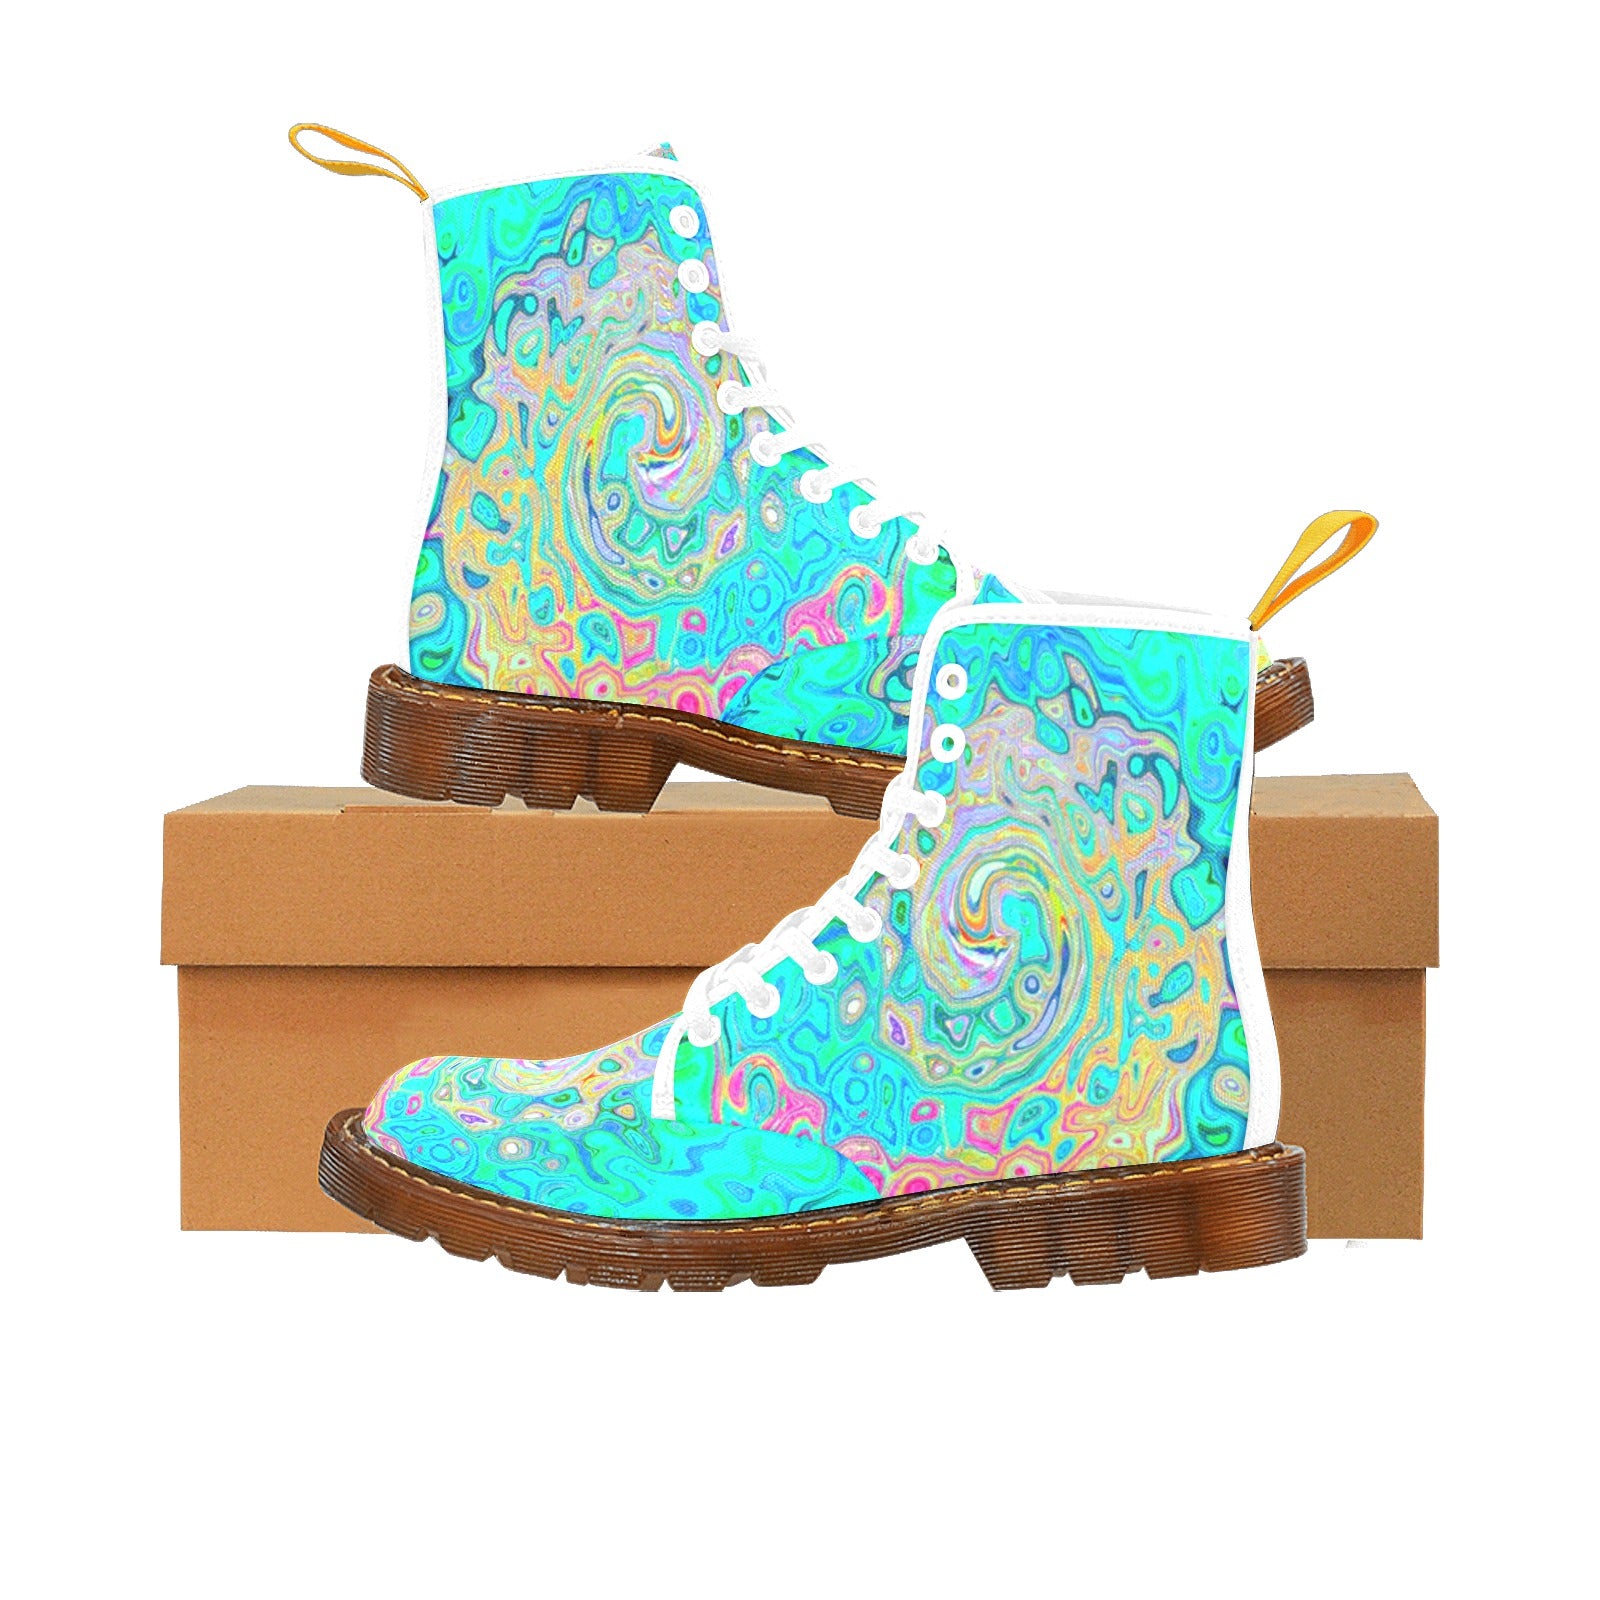 Boots for Women, Groovy Abstract Retro Rainbow Liquid Swirl - White